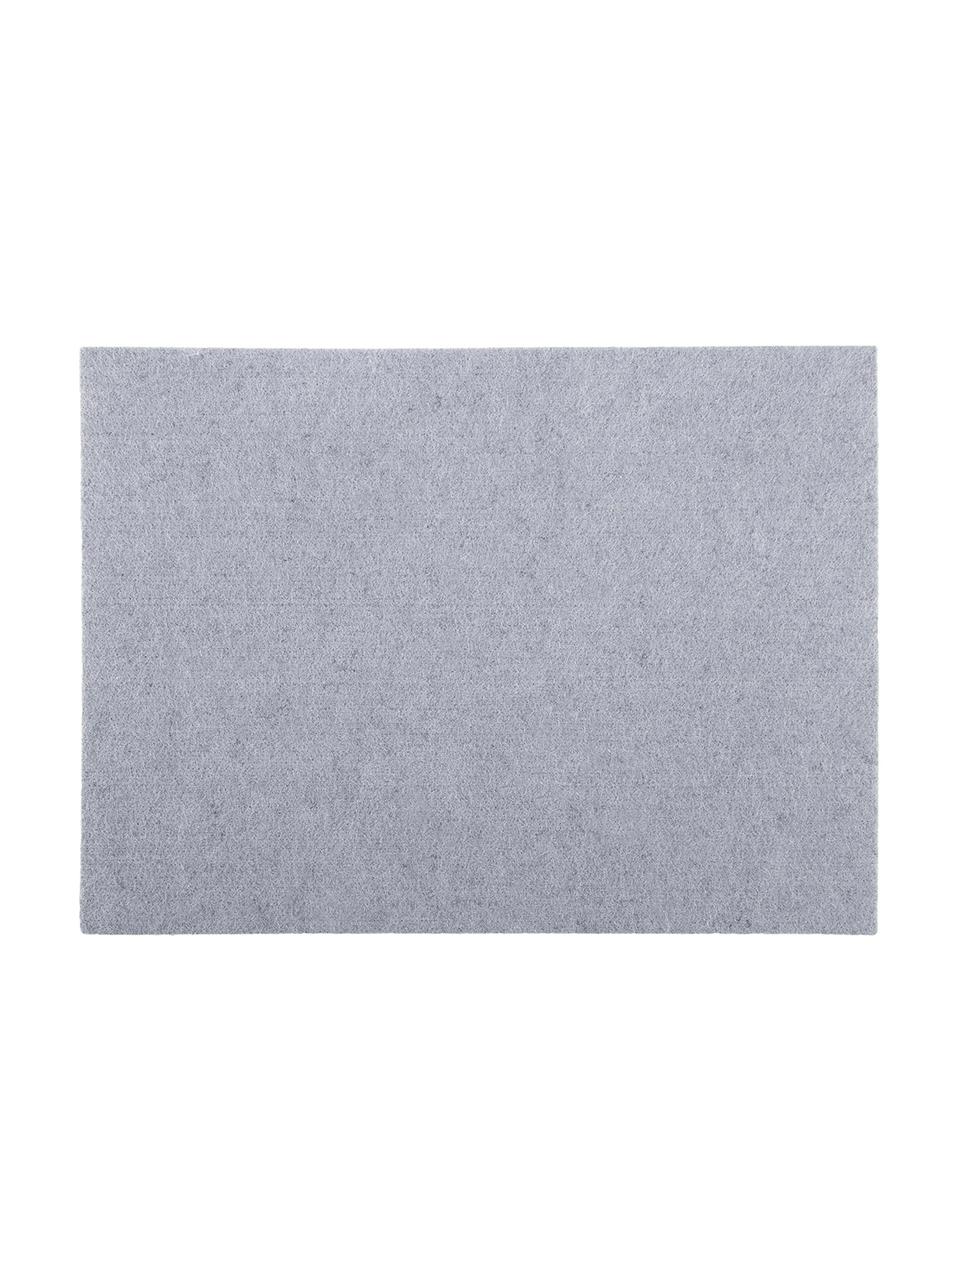 Tischsets Felto aus Filz, 2 Stück, Filz (Polyester), Grau, B 33 x L 45 cm